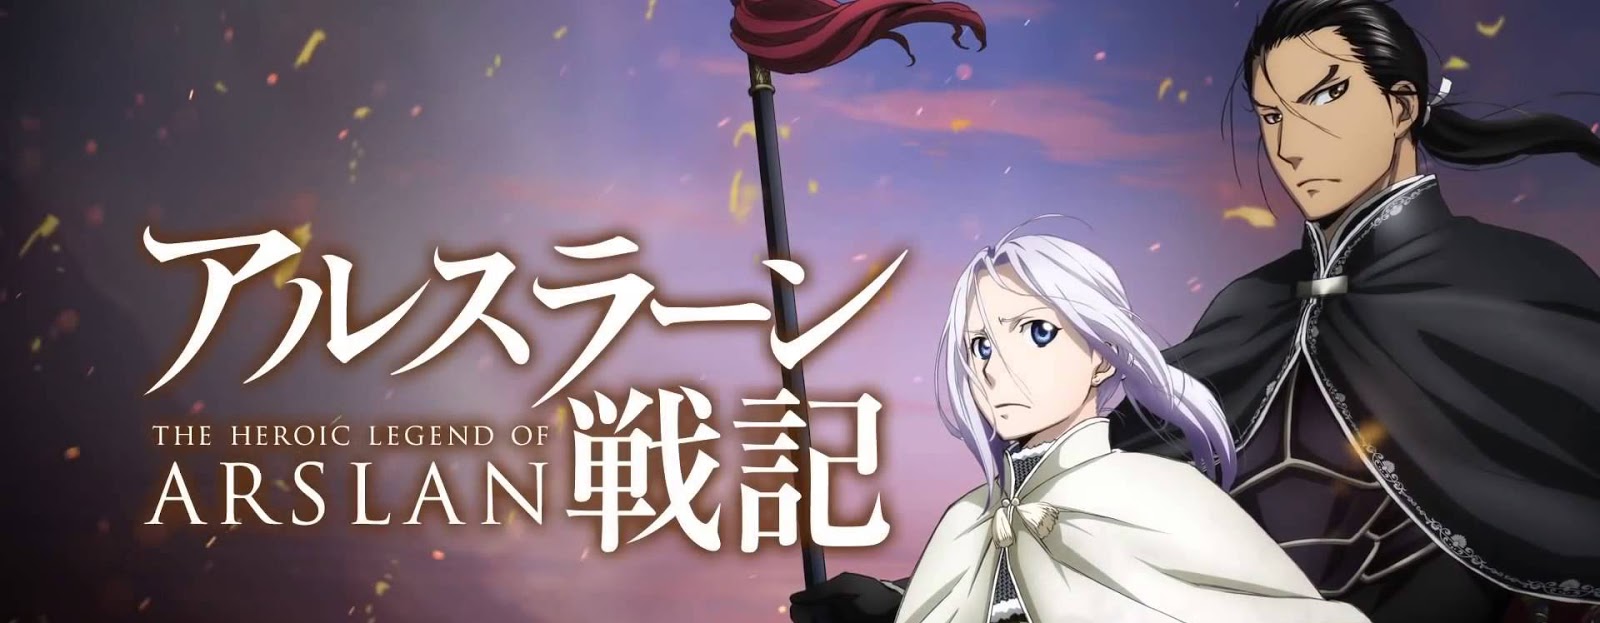 Tokyo Ravens Anime Announced – AnimeNation Anime News Blog